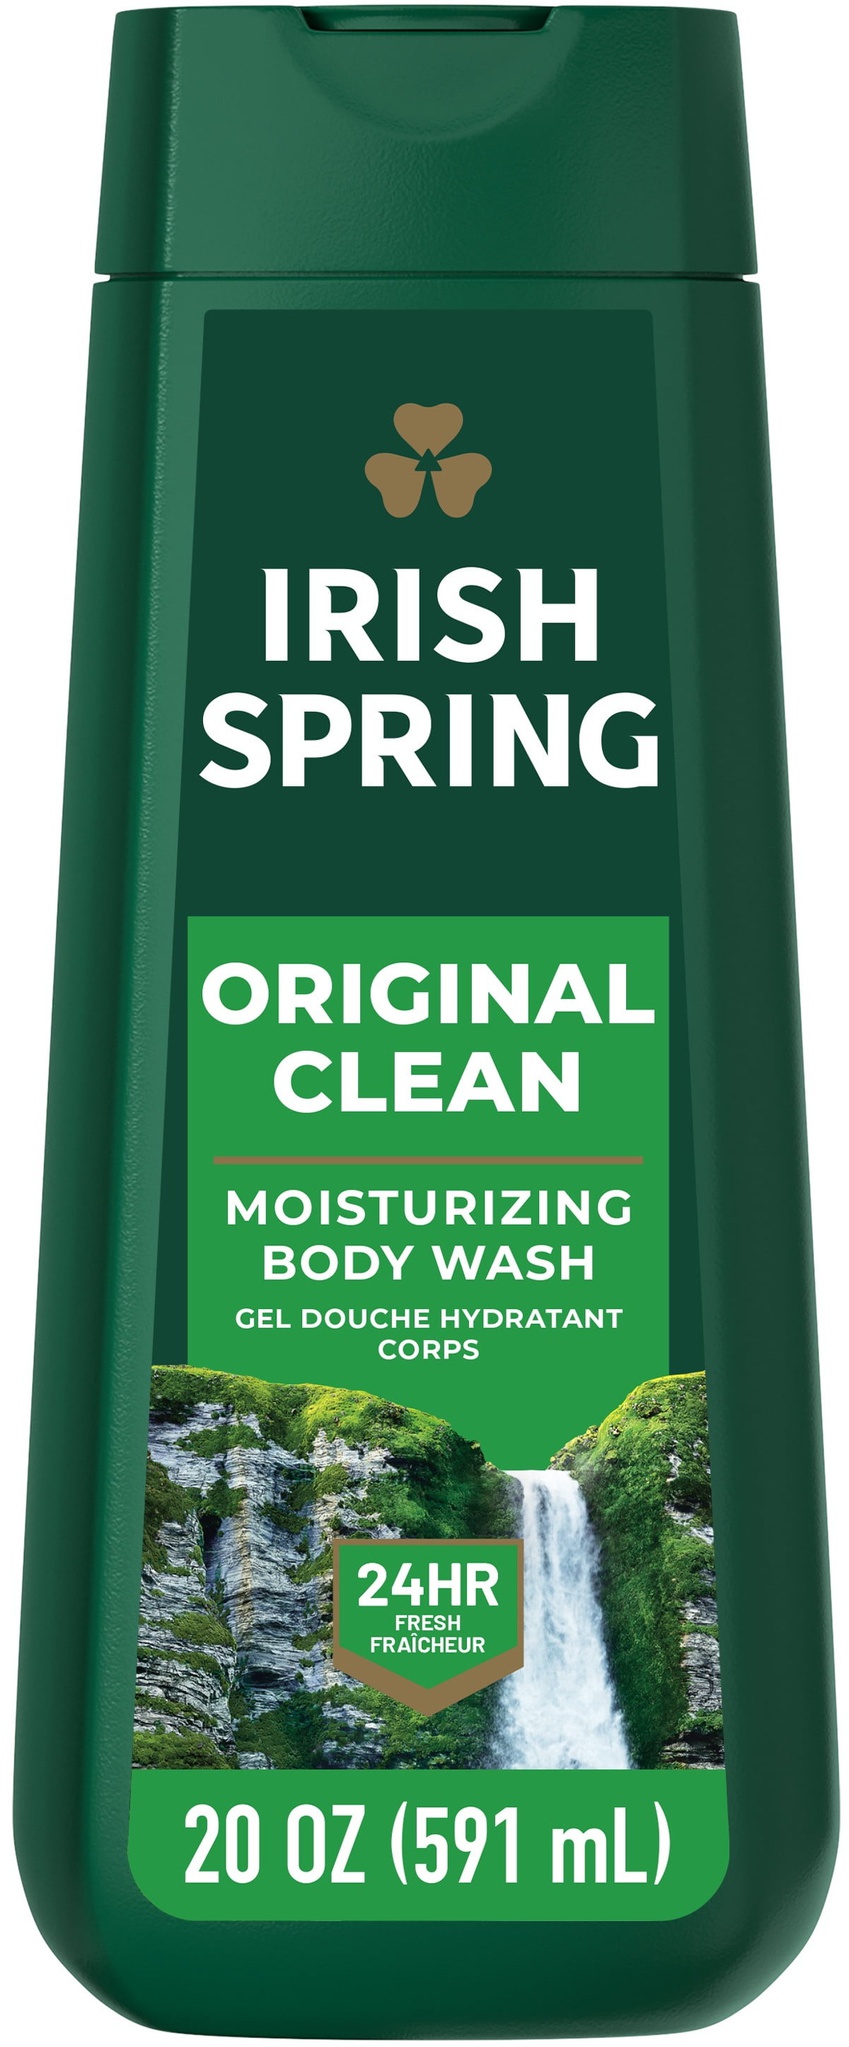 Irish Spring Original Clean Body Wash